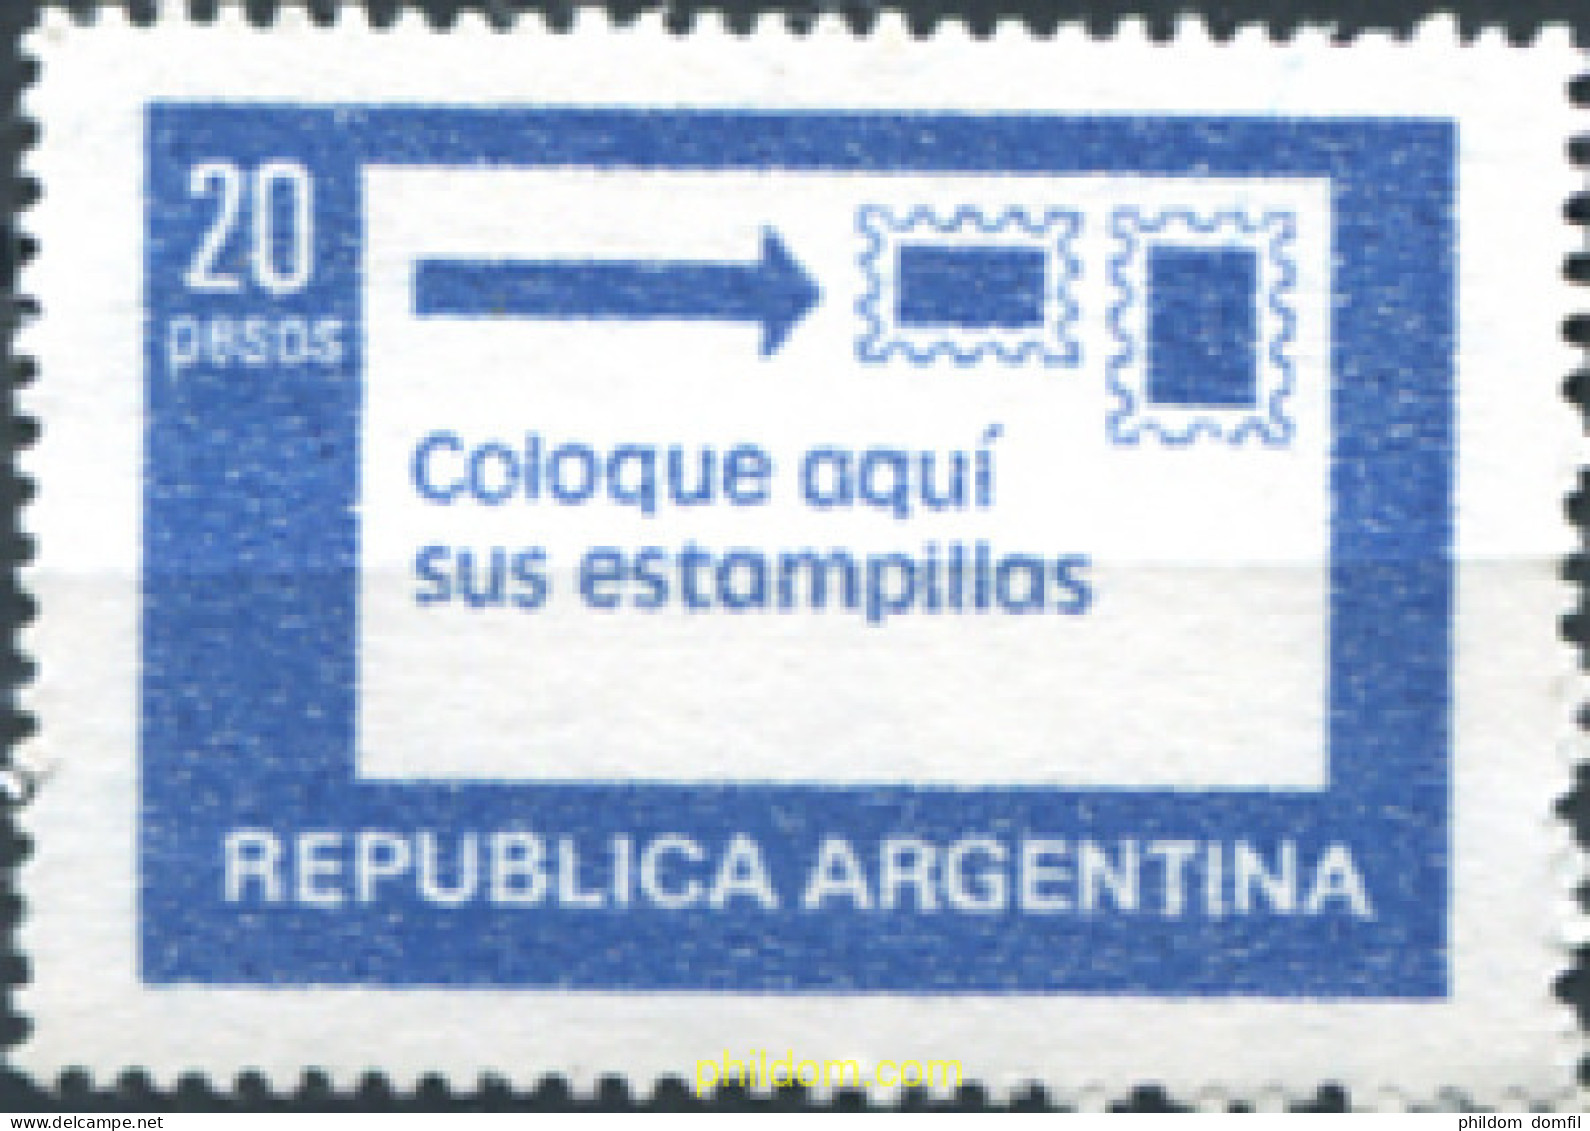 728916 MNH ARGENTINA 1978 SLOGAN POSTAL - Nuovi